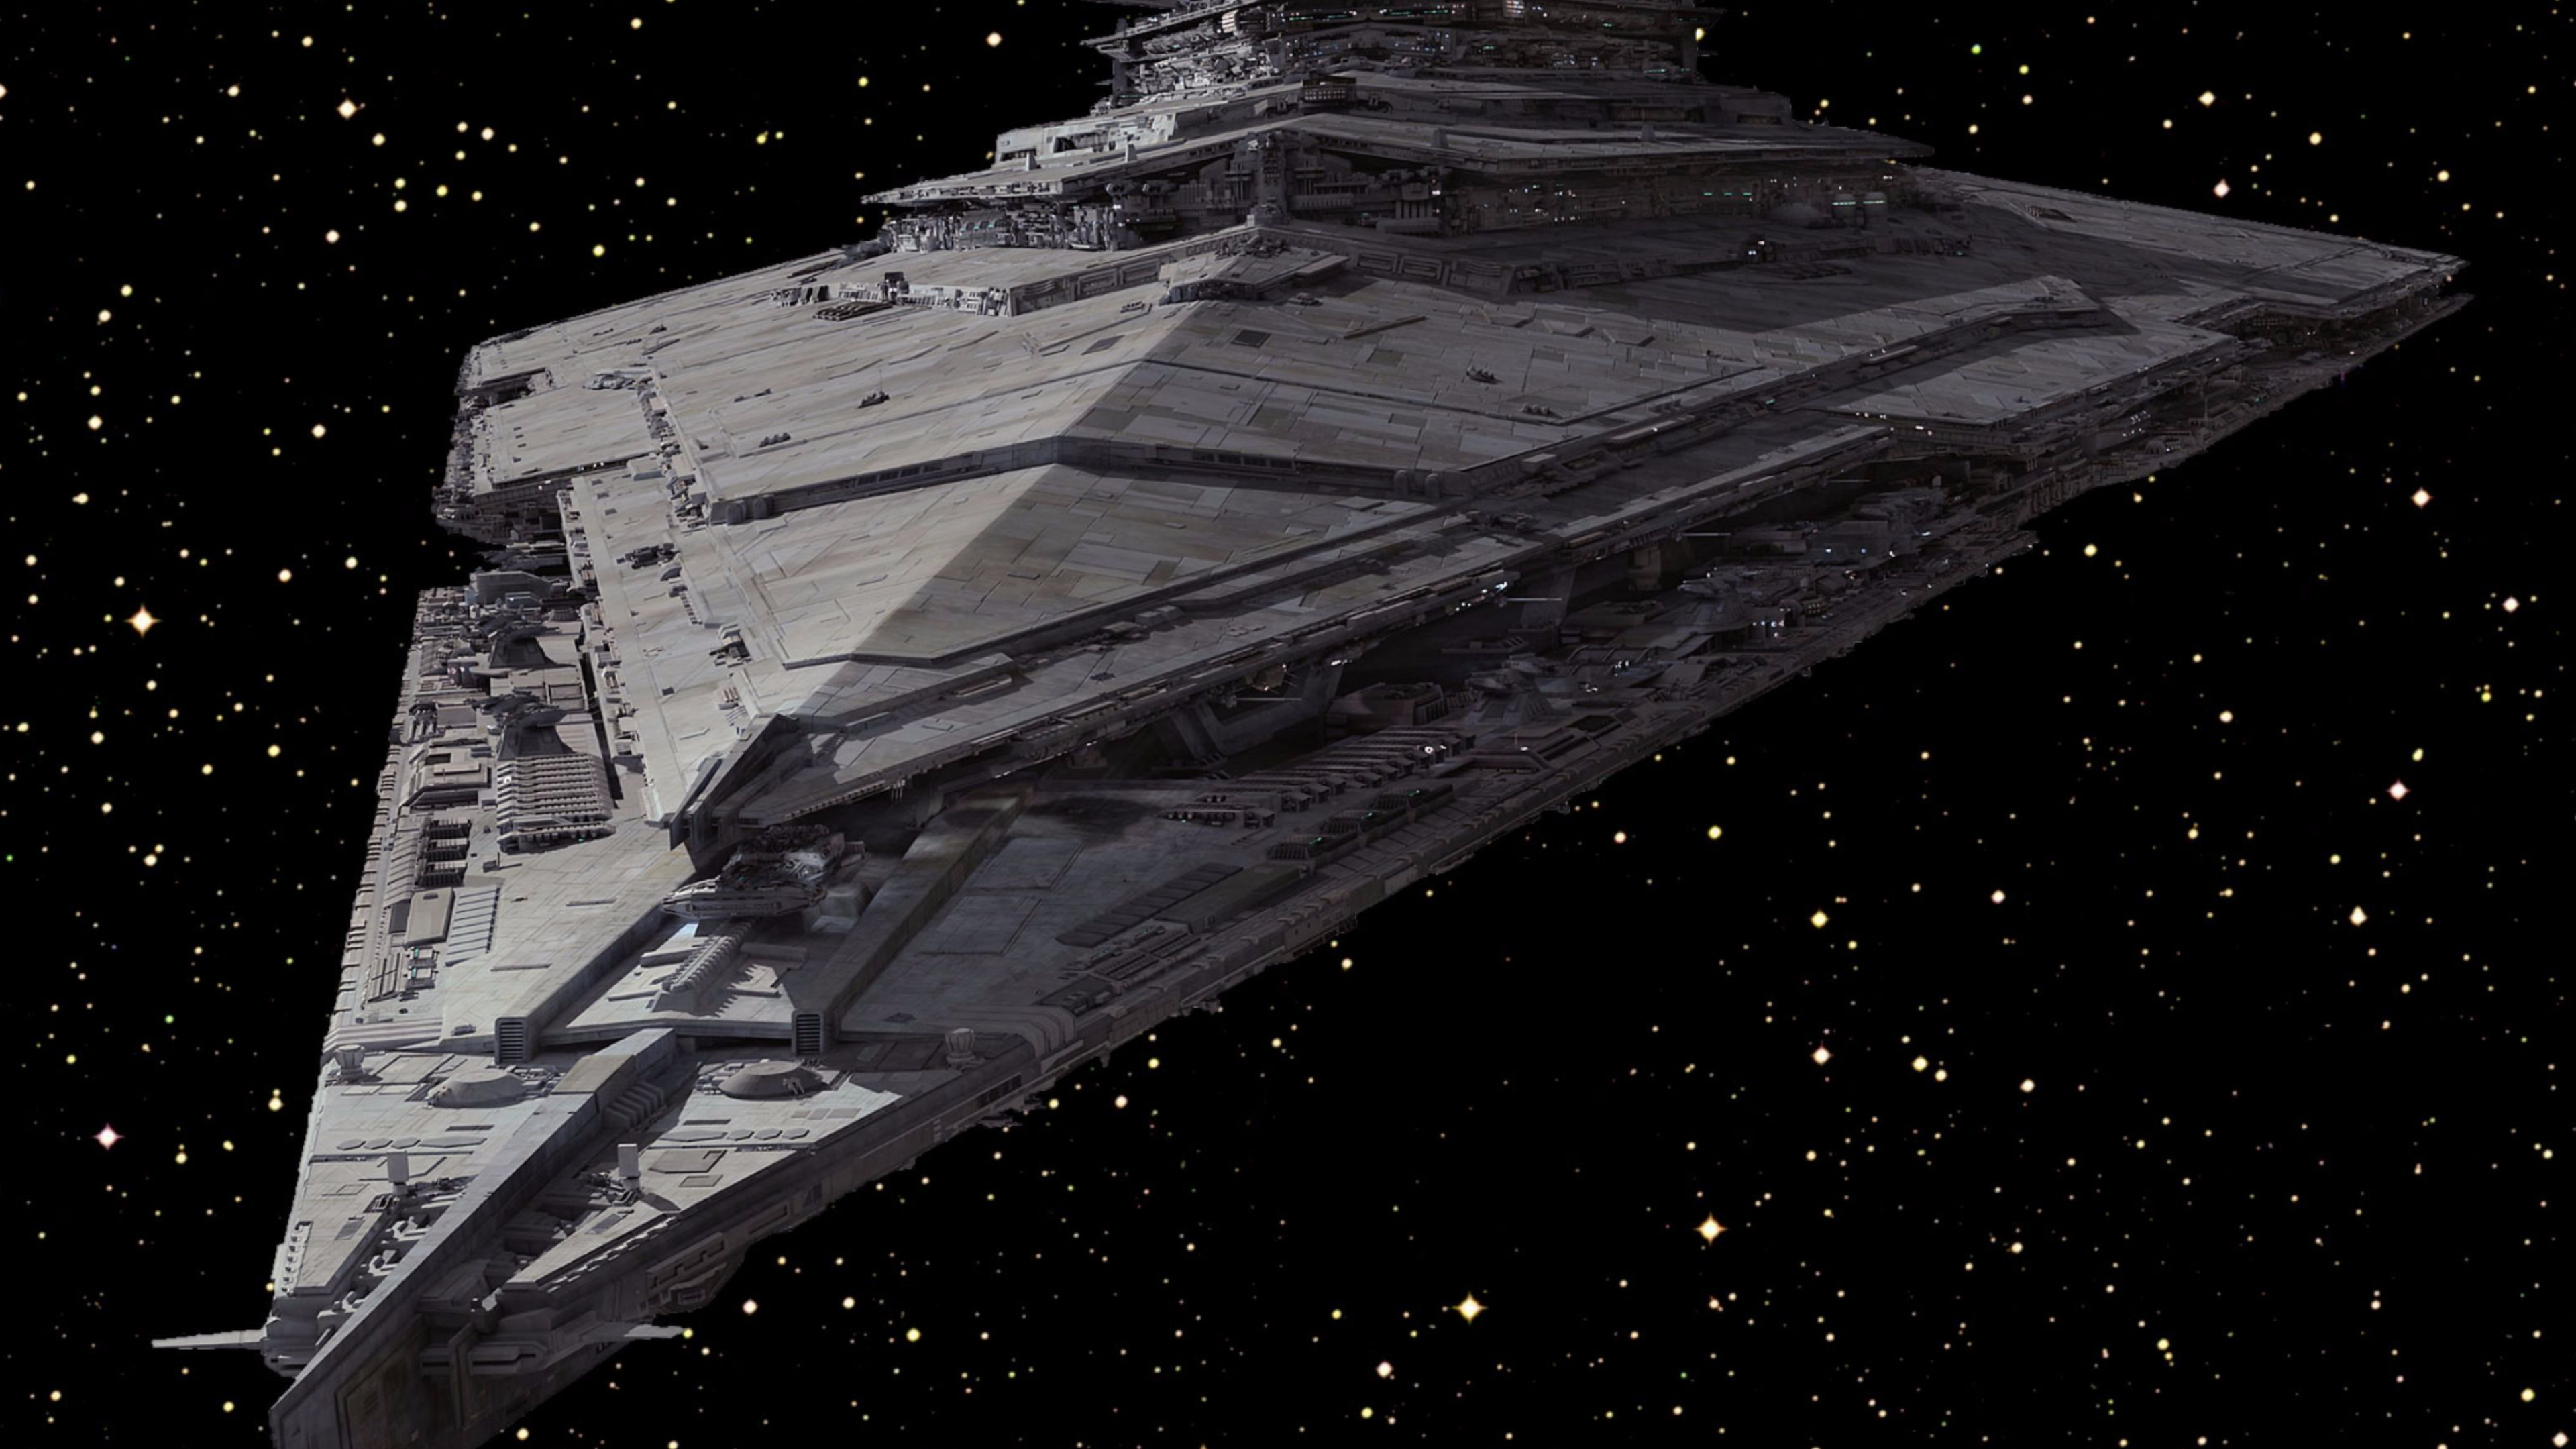 3840x2160 Popular Star Wars The Force Awakens 4K wallpaper | Star wars images, Star wars spaceships, Star destroyer